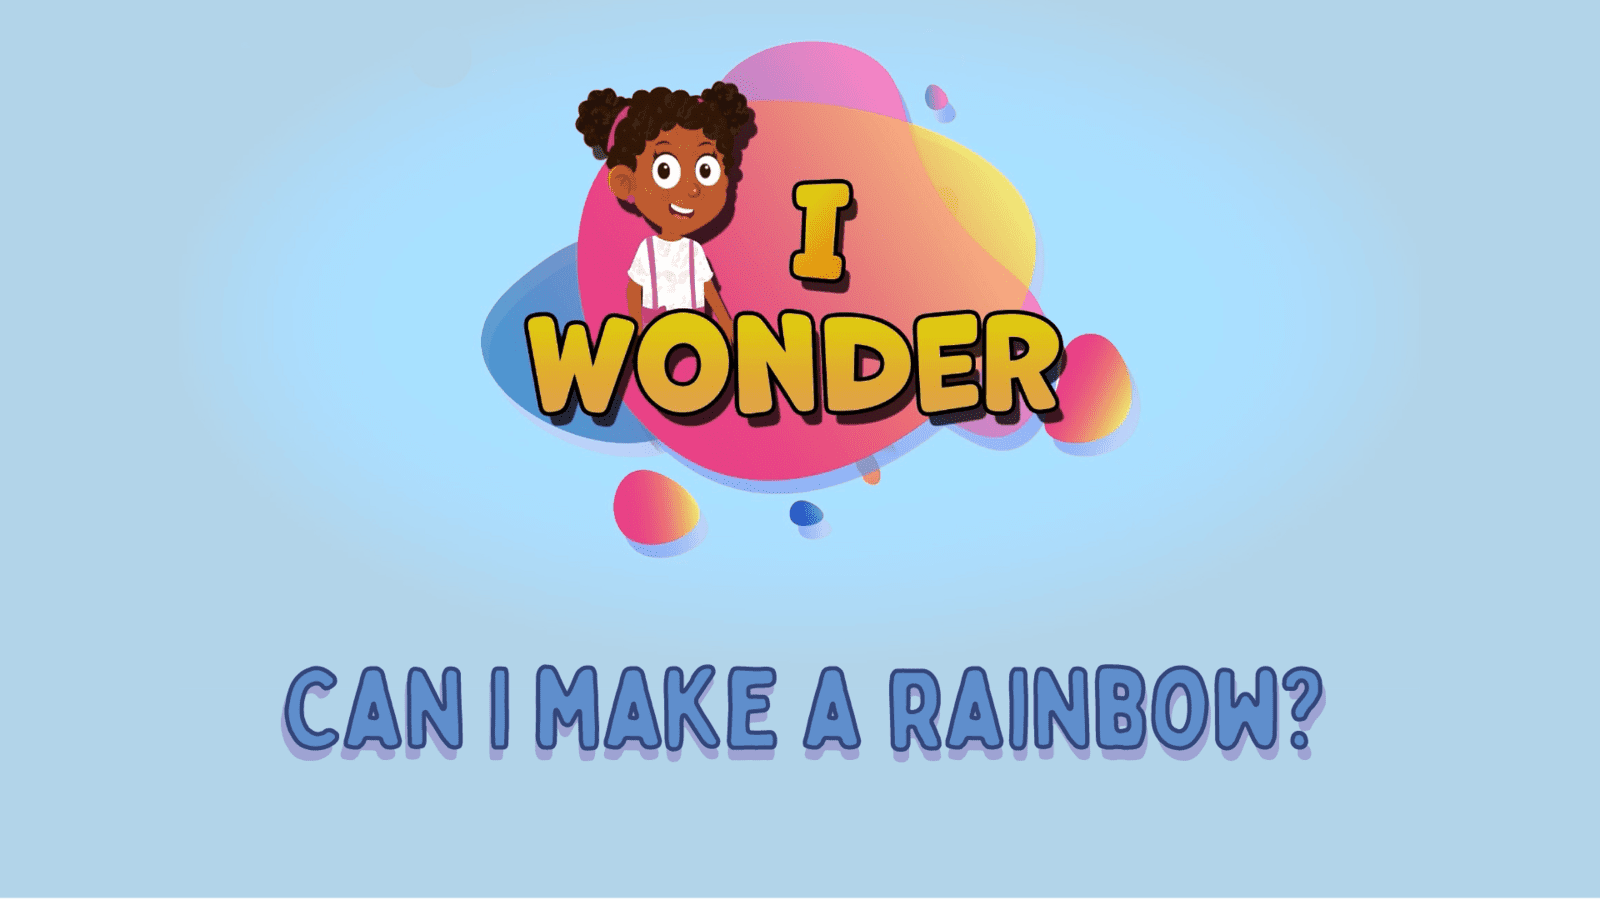 Can I Make A Rainbow?